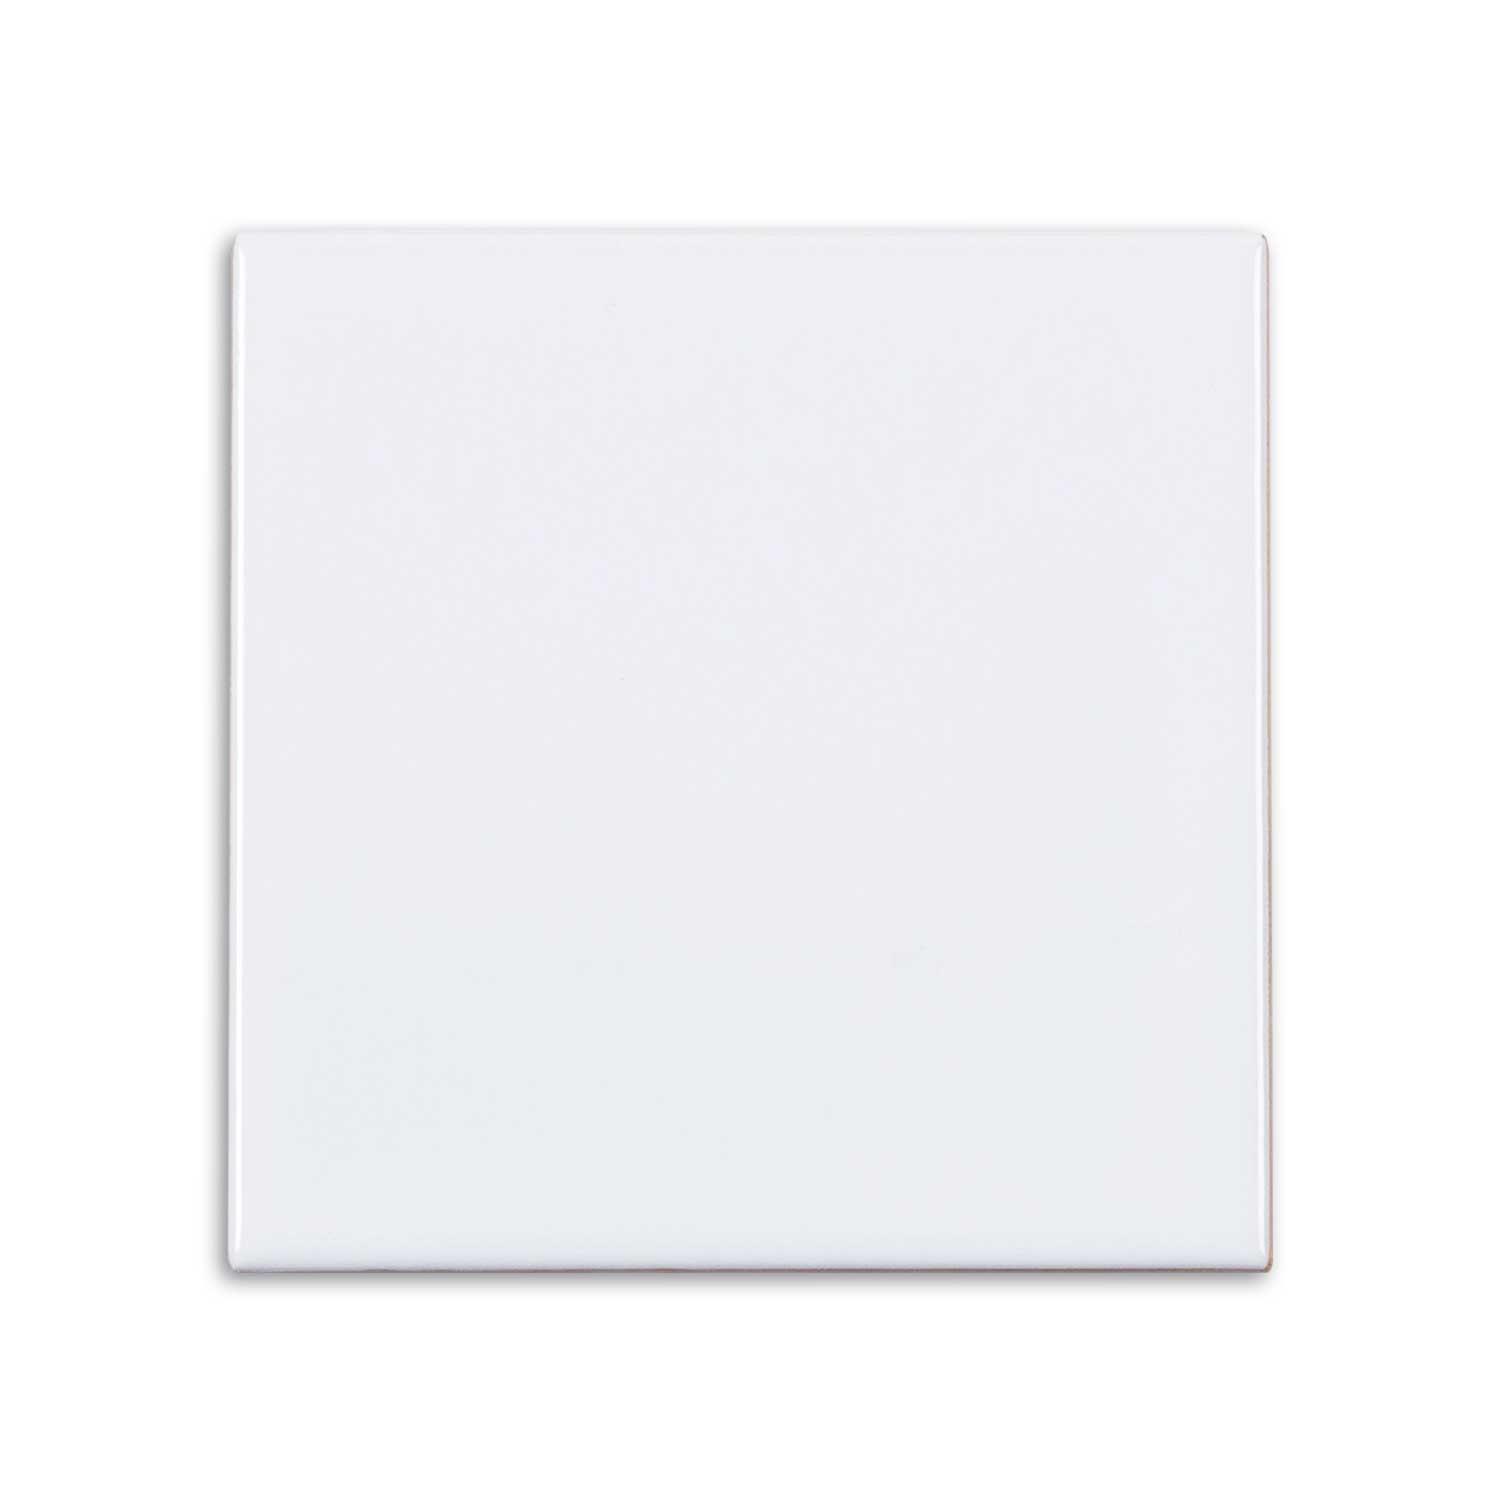 Classic Gloss White Ceramic Wall Tile Subway Square 100x100mm